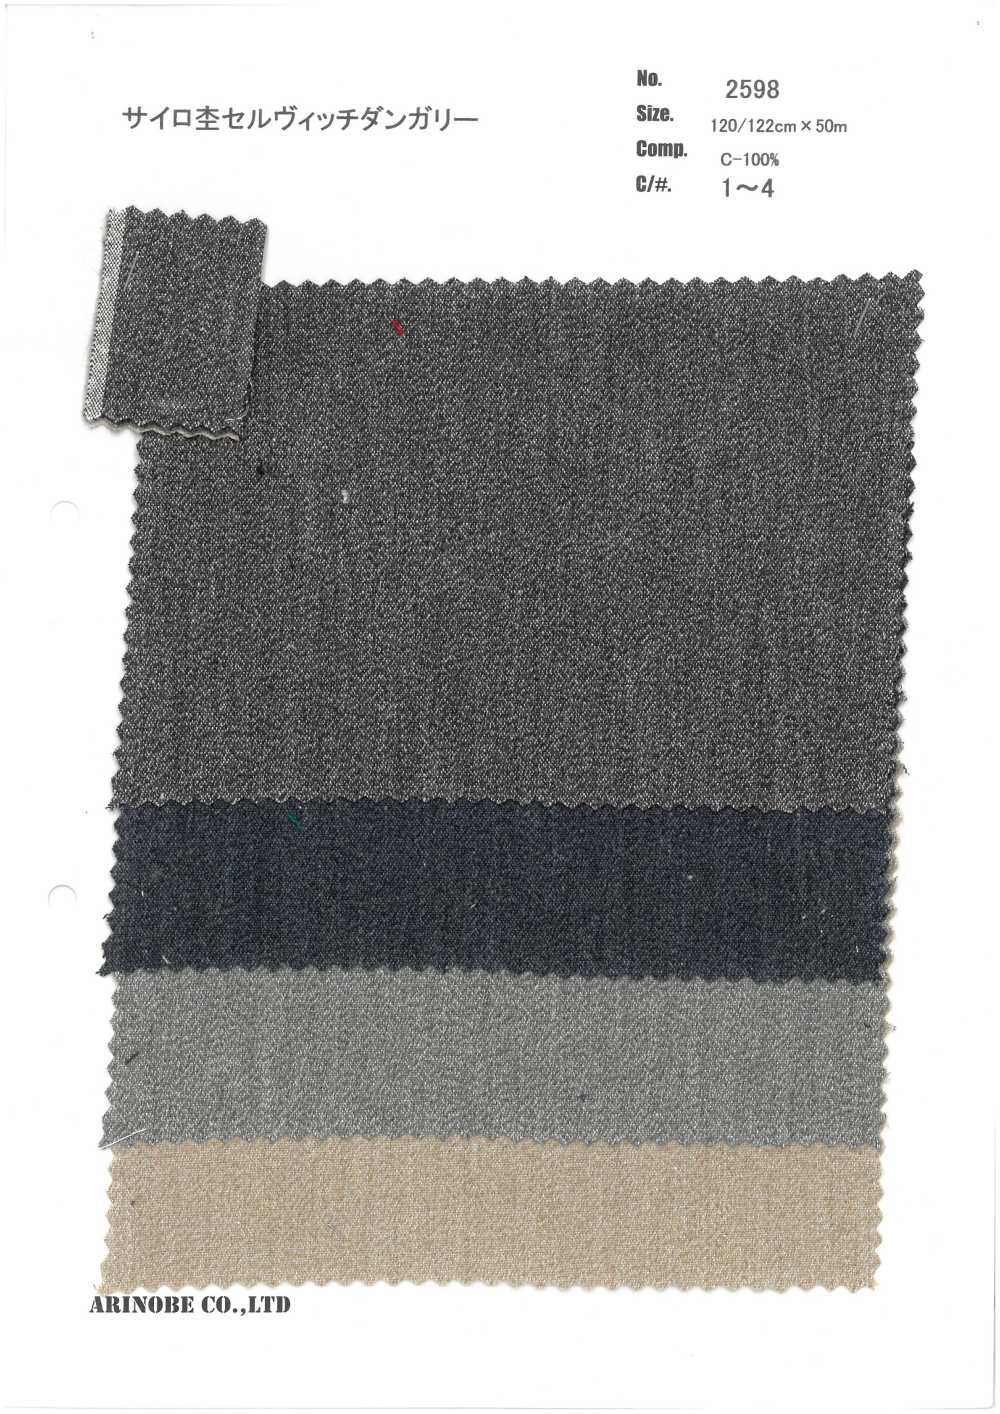 2598 Silo Melange Selvedge Dungaree[Textile / Fabric] ARINOBE CO., LTD.